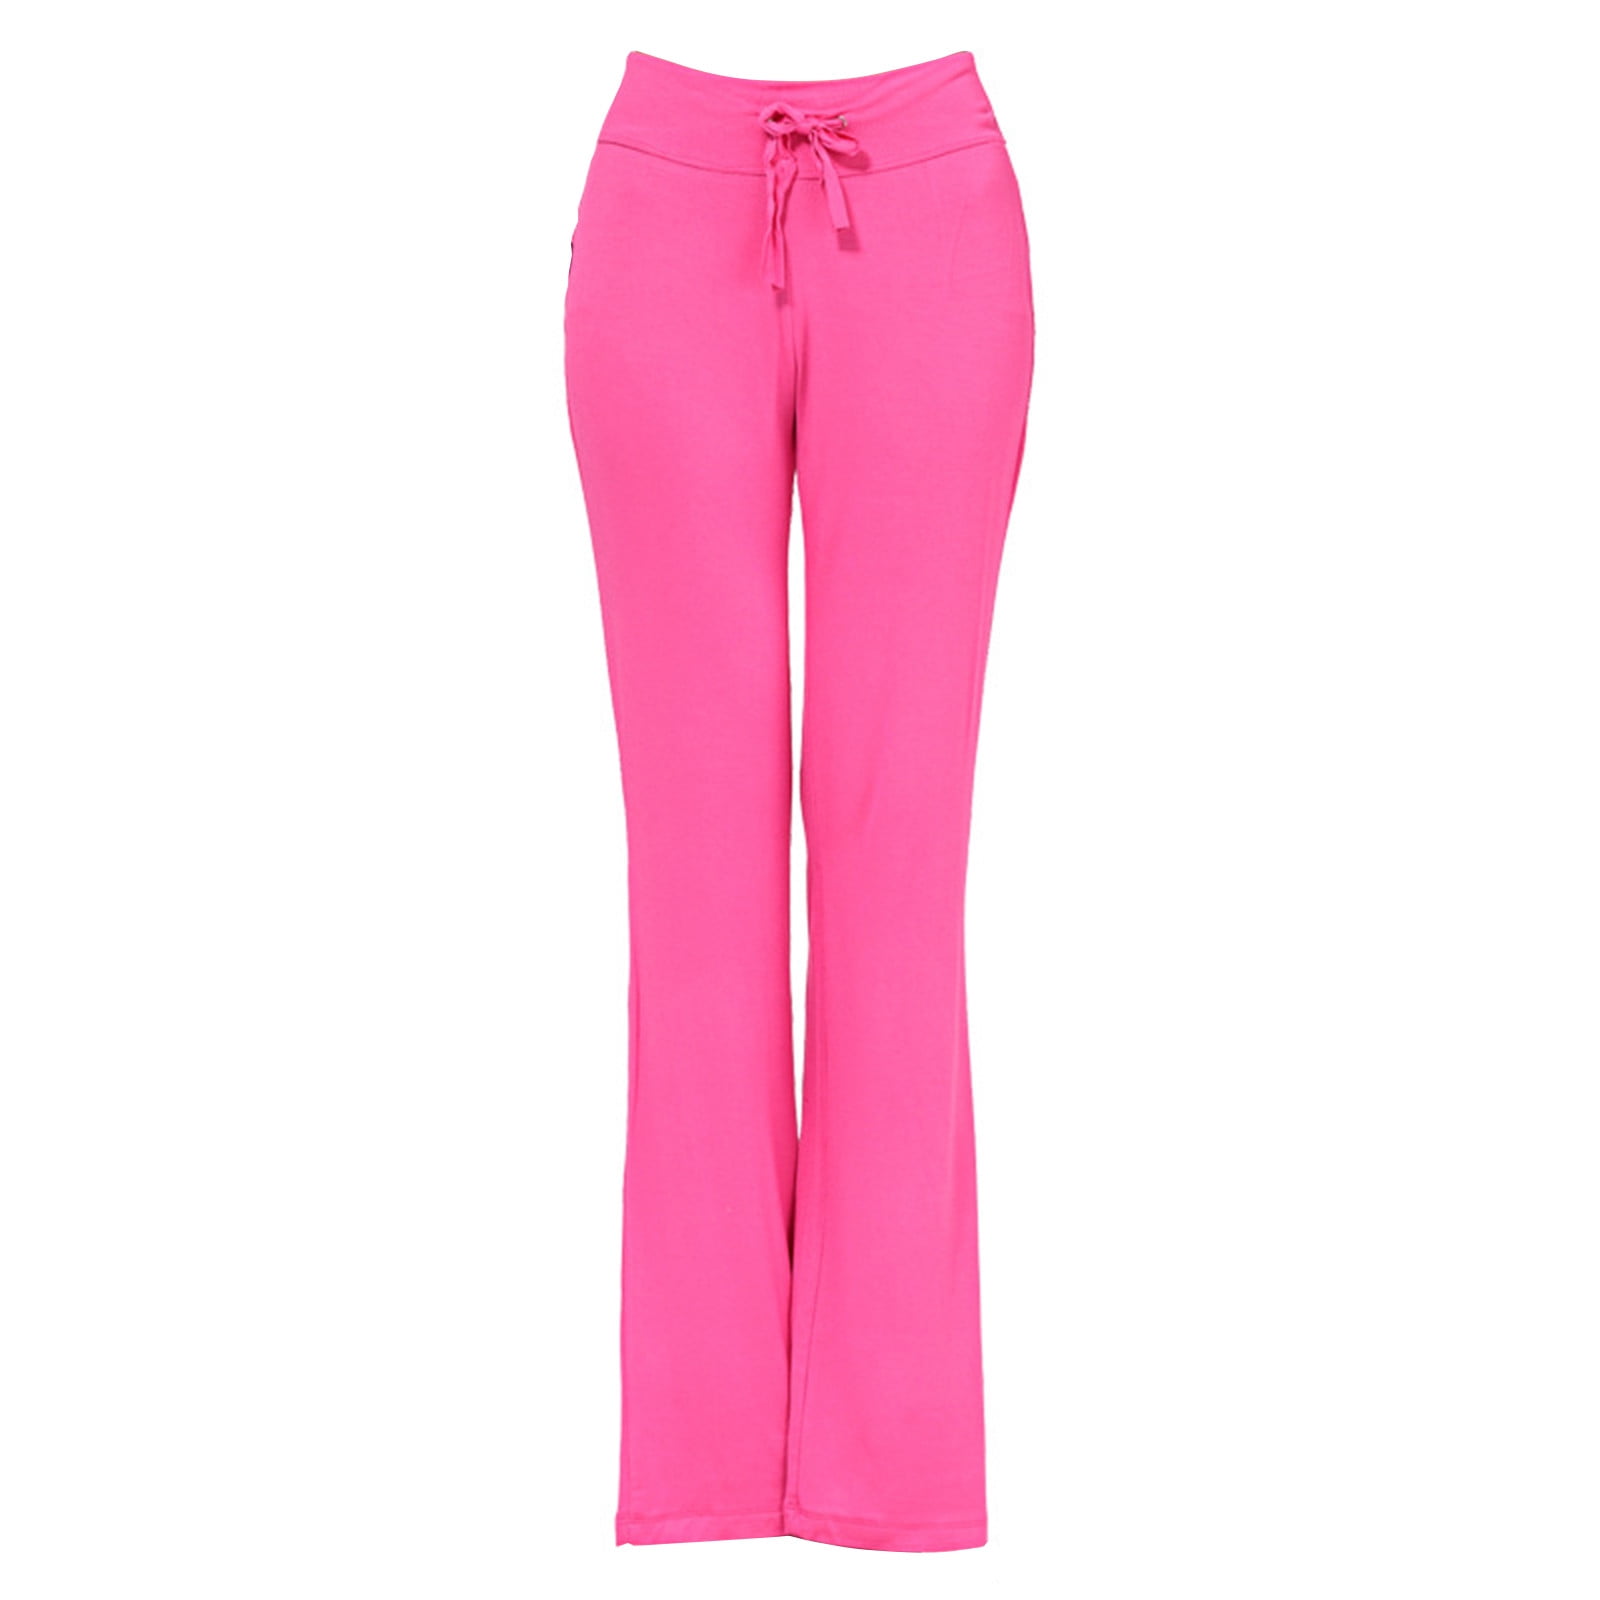 Chic Pink Trouser Pants - High-Waisted Pants - Wide-Leg Pants - Lulus